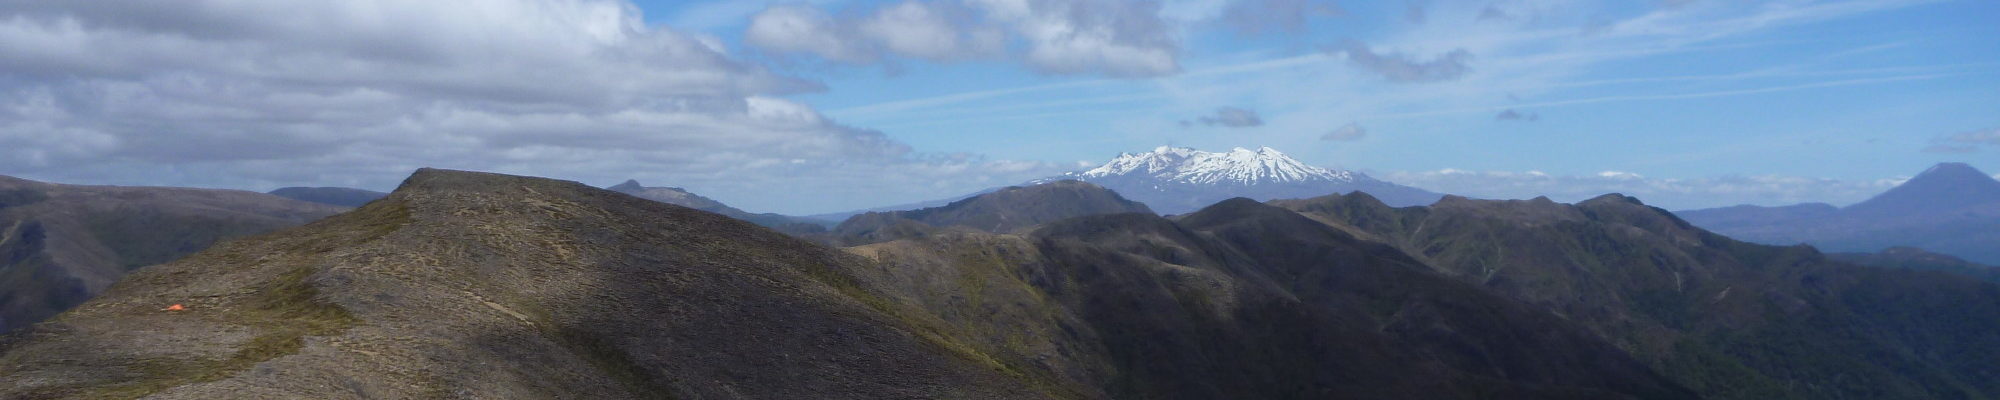 Ruapehu and Ngauruhoe seen from the Kaimanawa Ranges